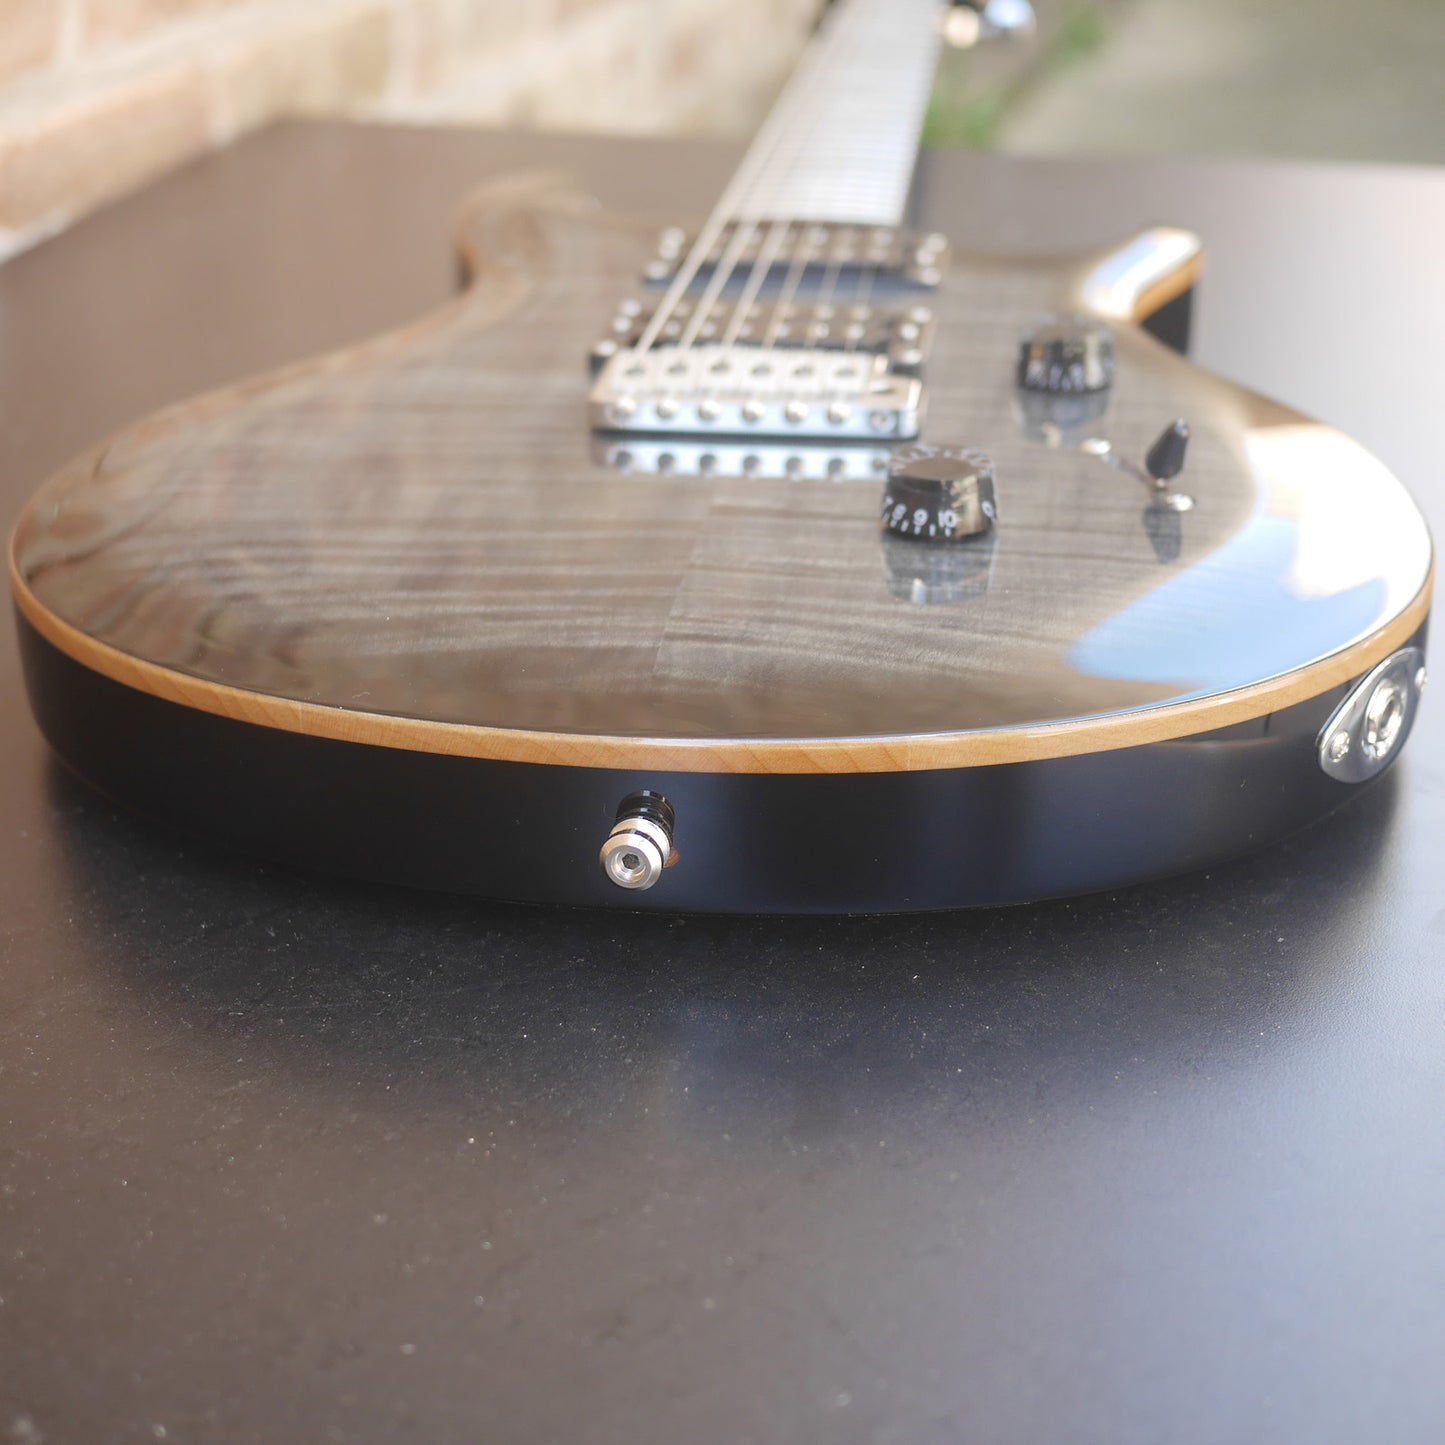 PRS SE Custom 24 Charcoal Burst Electric Guitar 2021